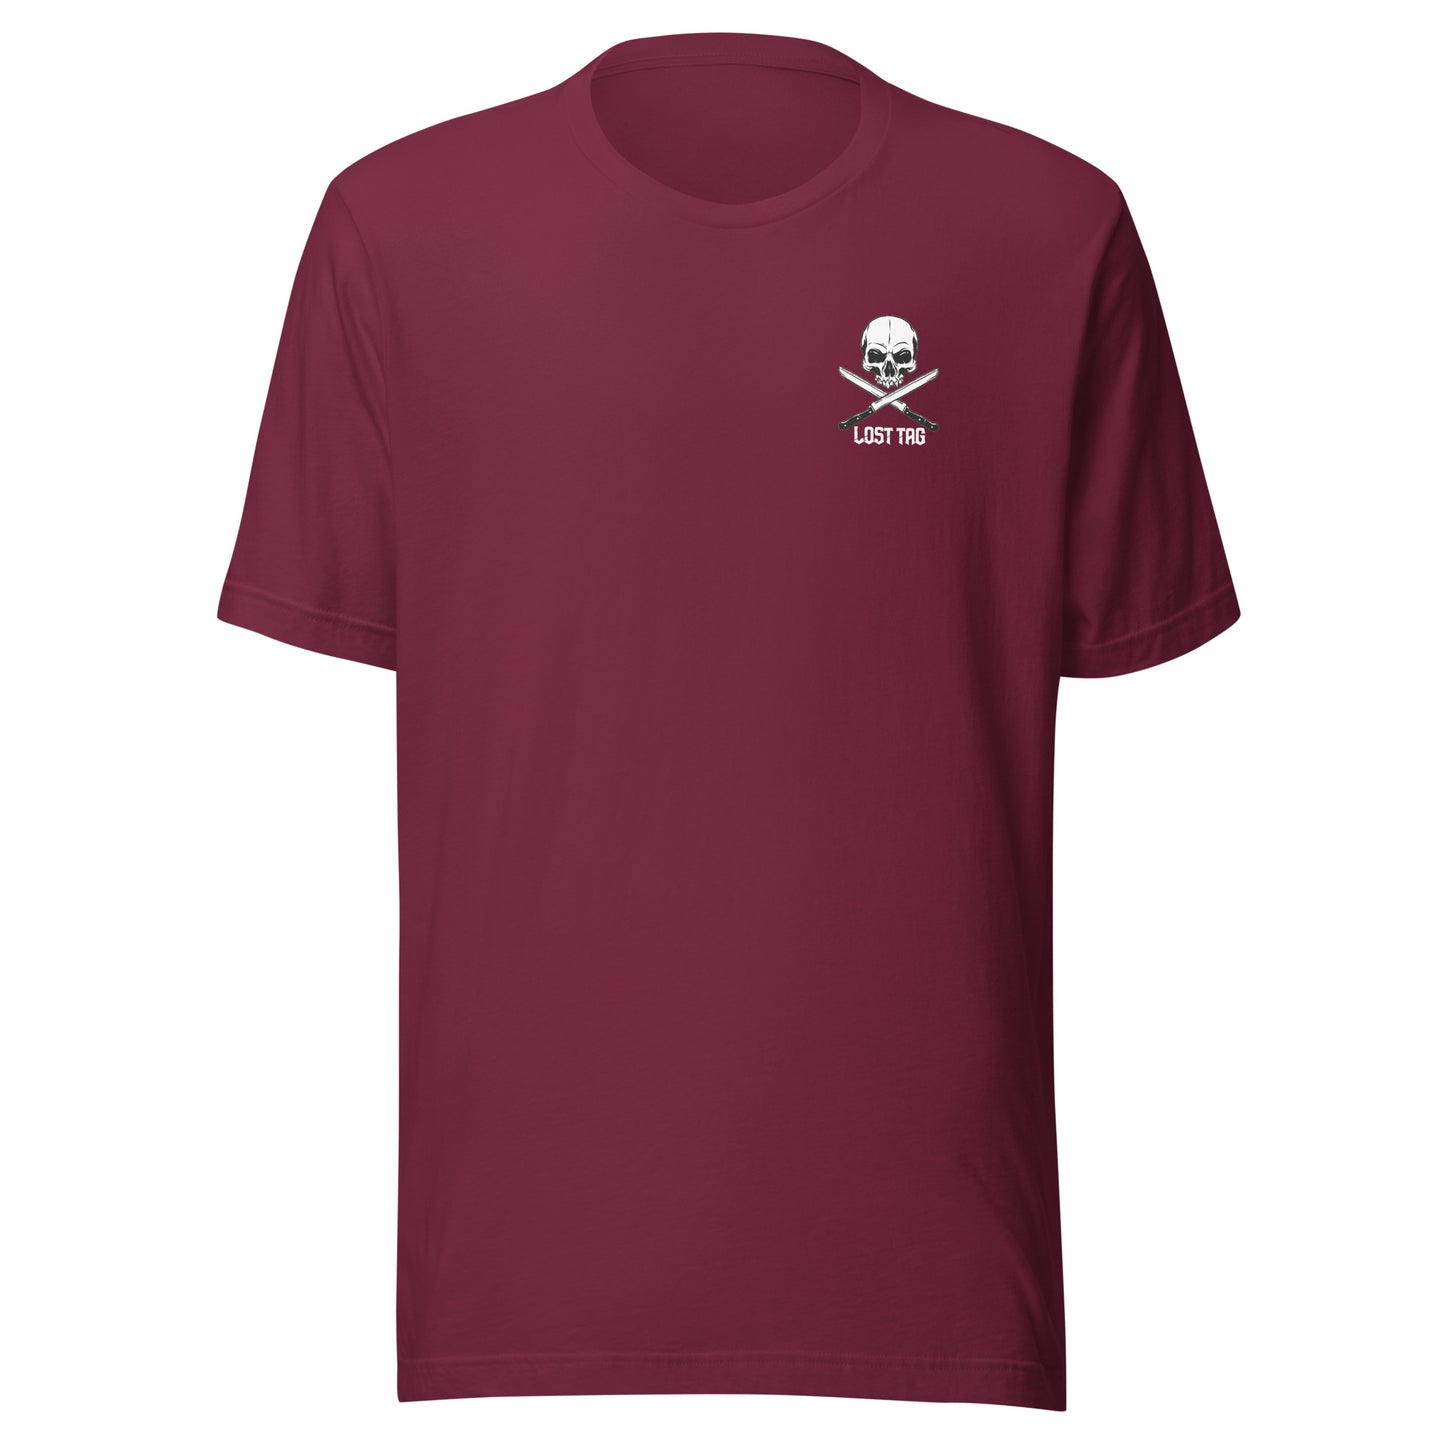 Tricho Propagation dual-sided unisex t-shirt